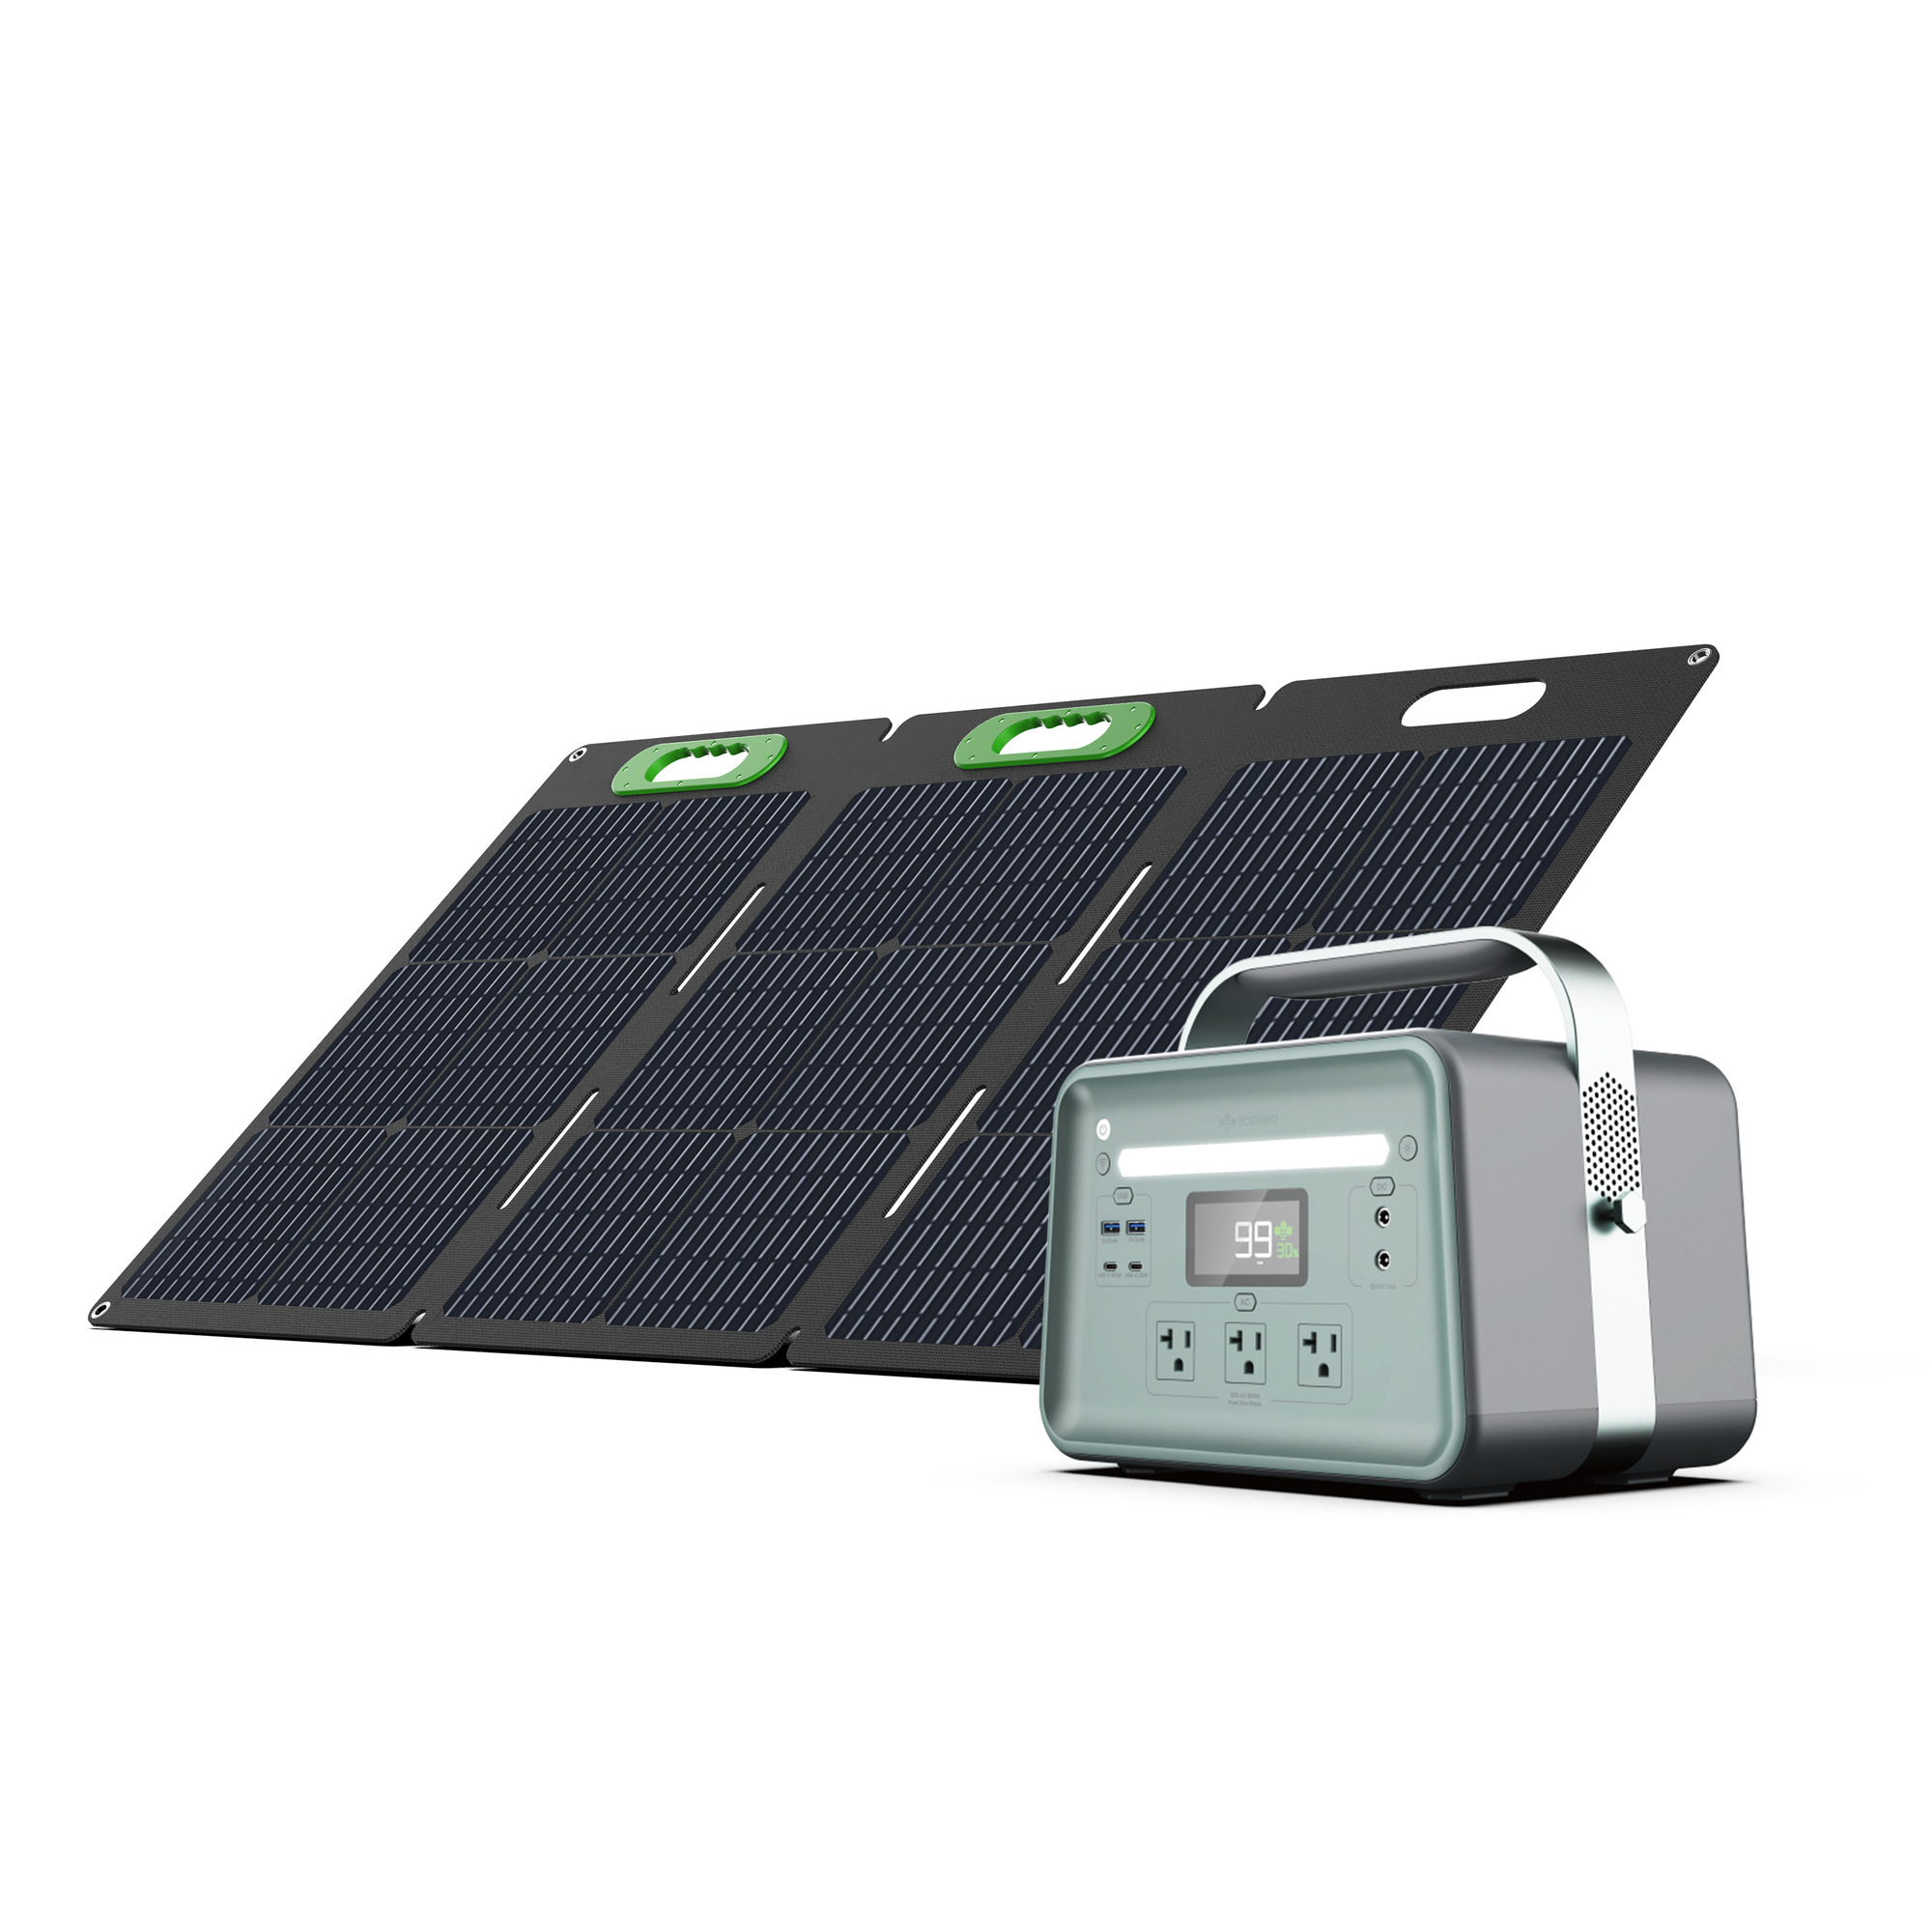 Yoshino, Solid-State Portable Solar Generator 660W, Running Watts 660, Surge Watts 920, Model K6SP11